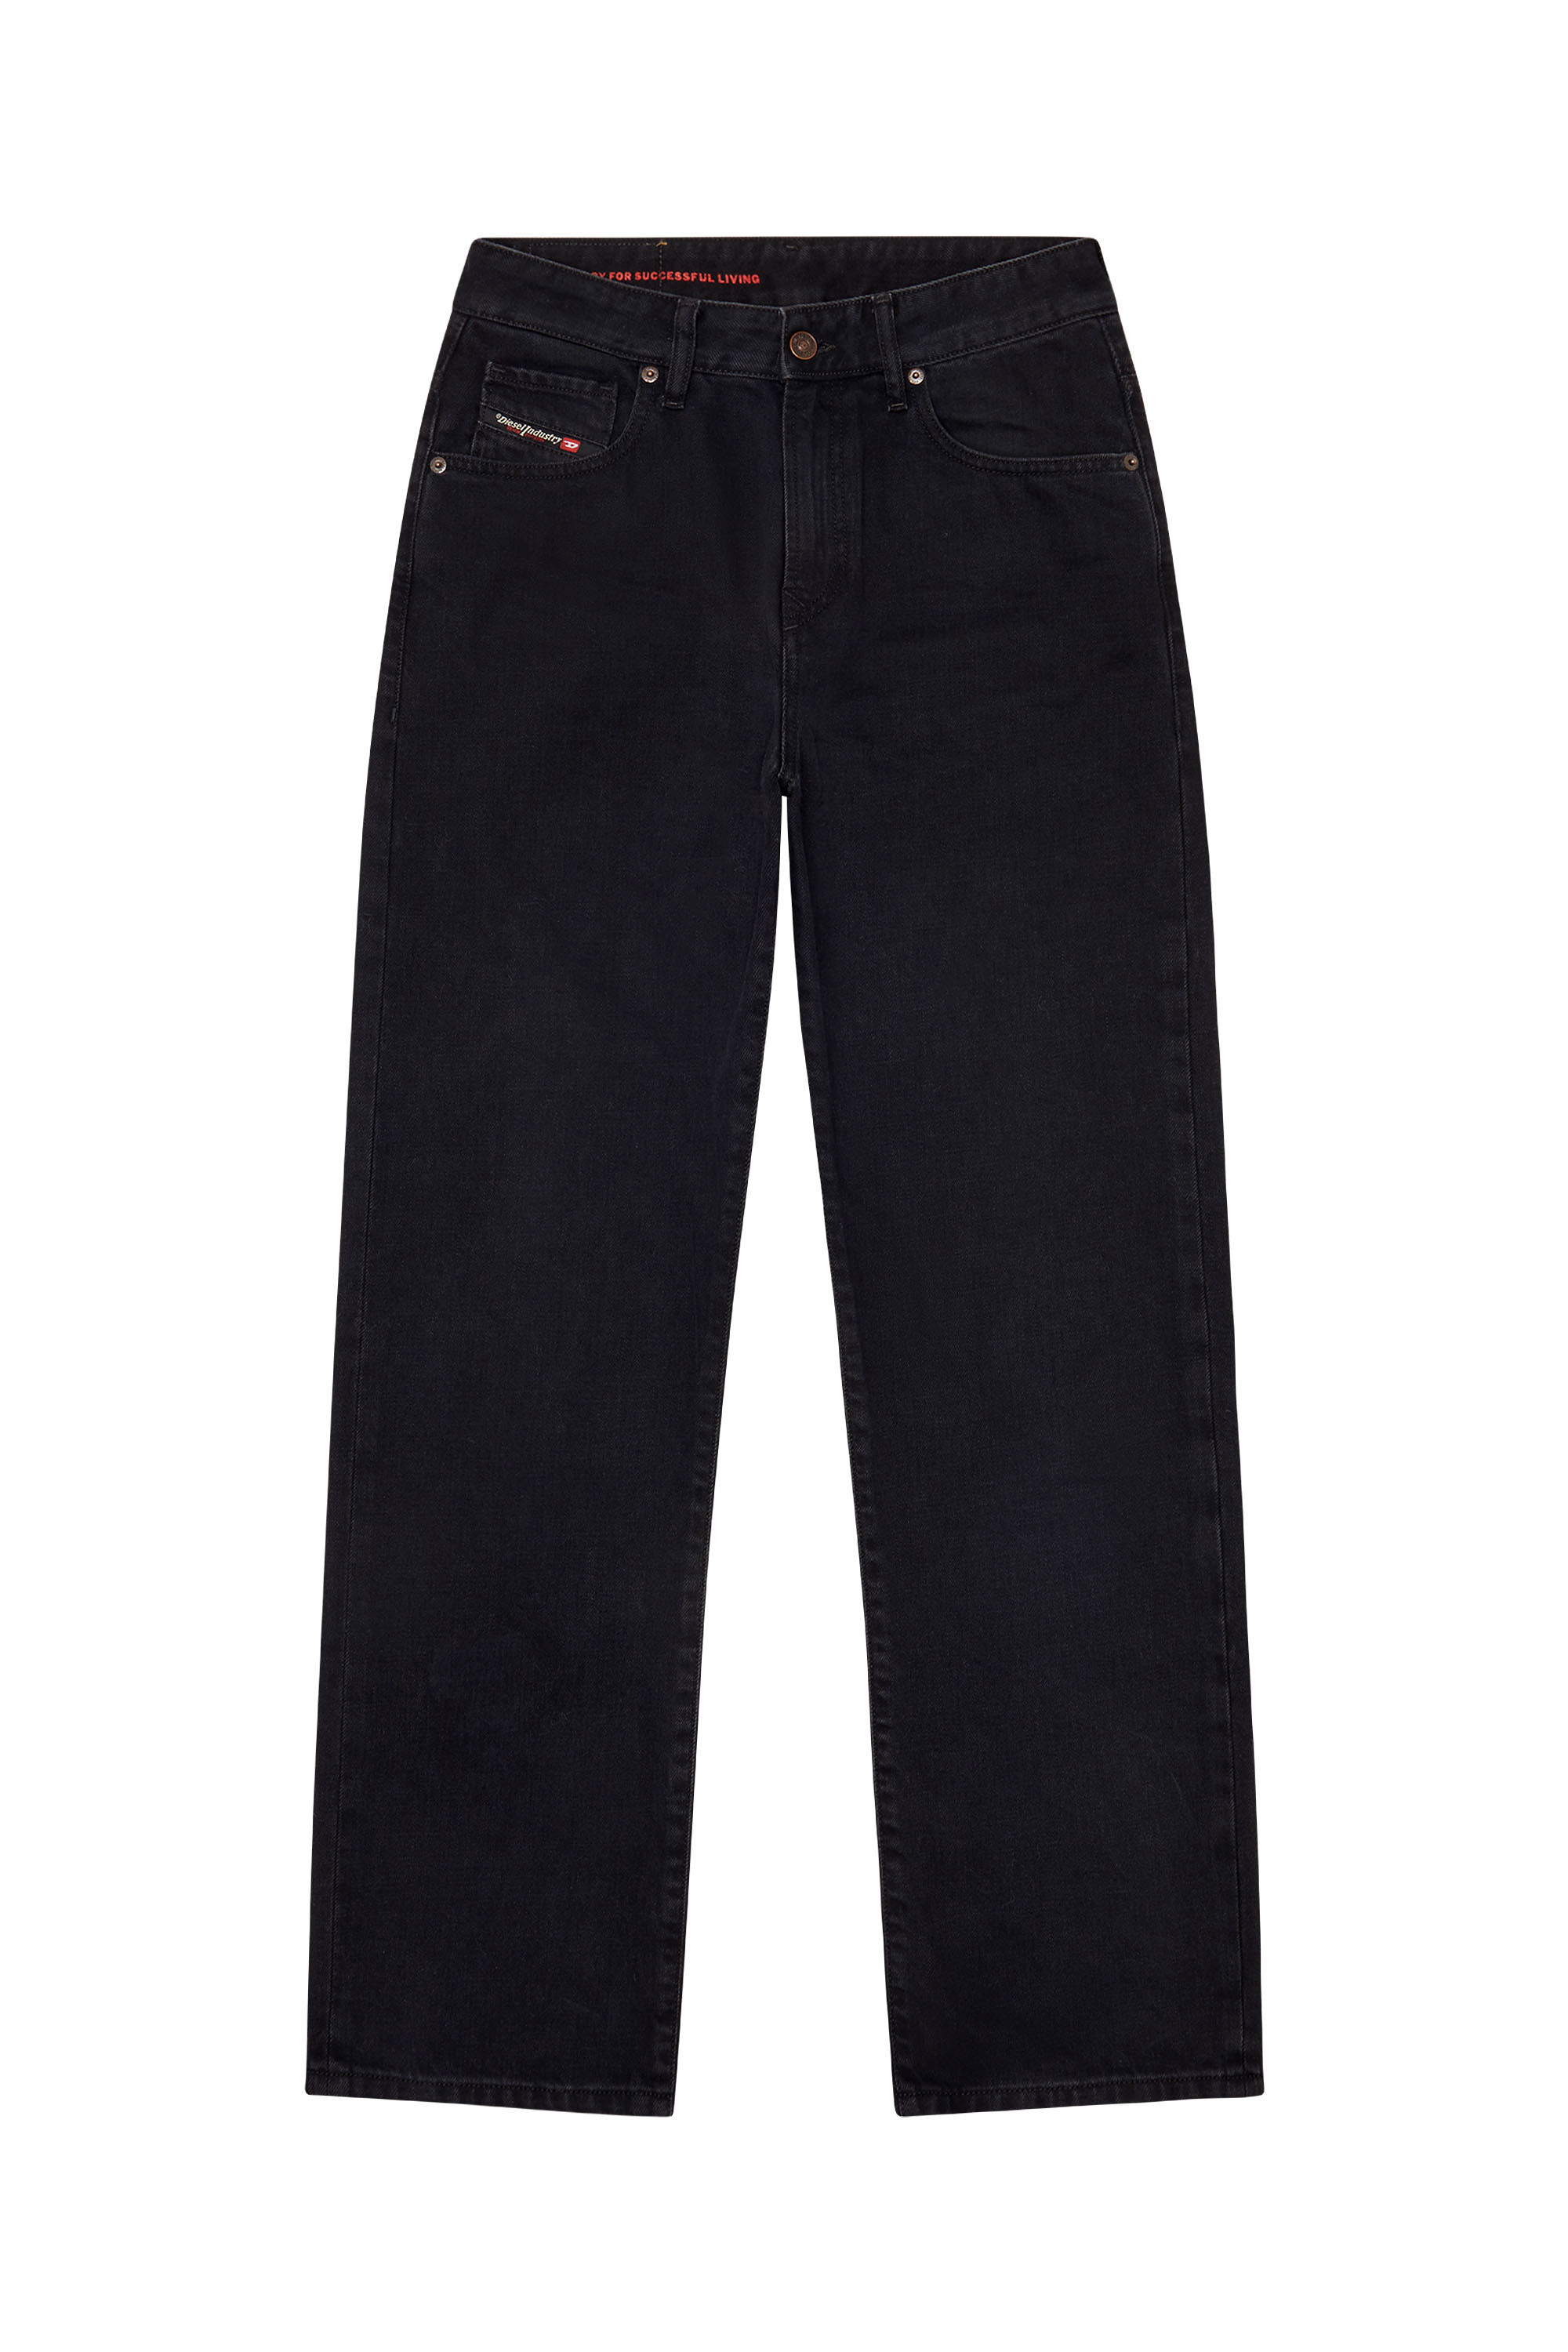 Straight Jeans 1999 D-Reggy Z09RL, Black/Dark grey - Jeans